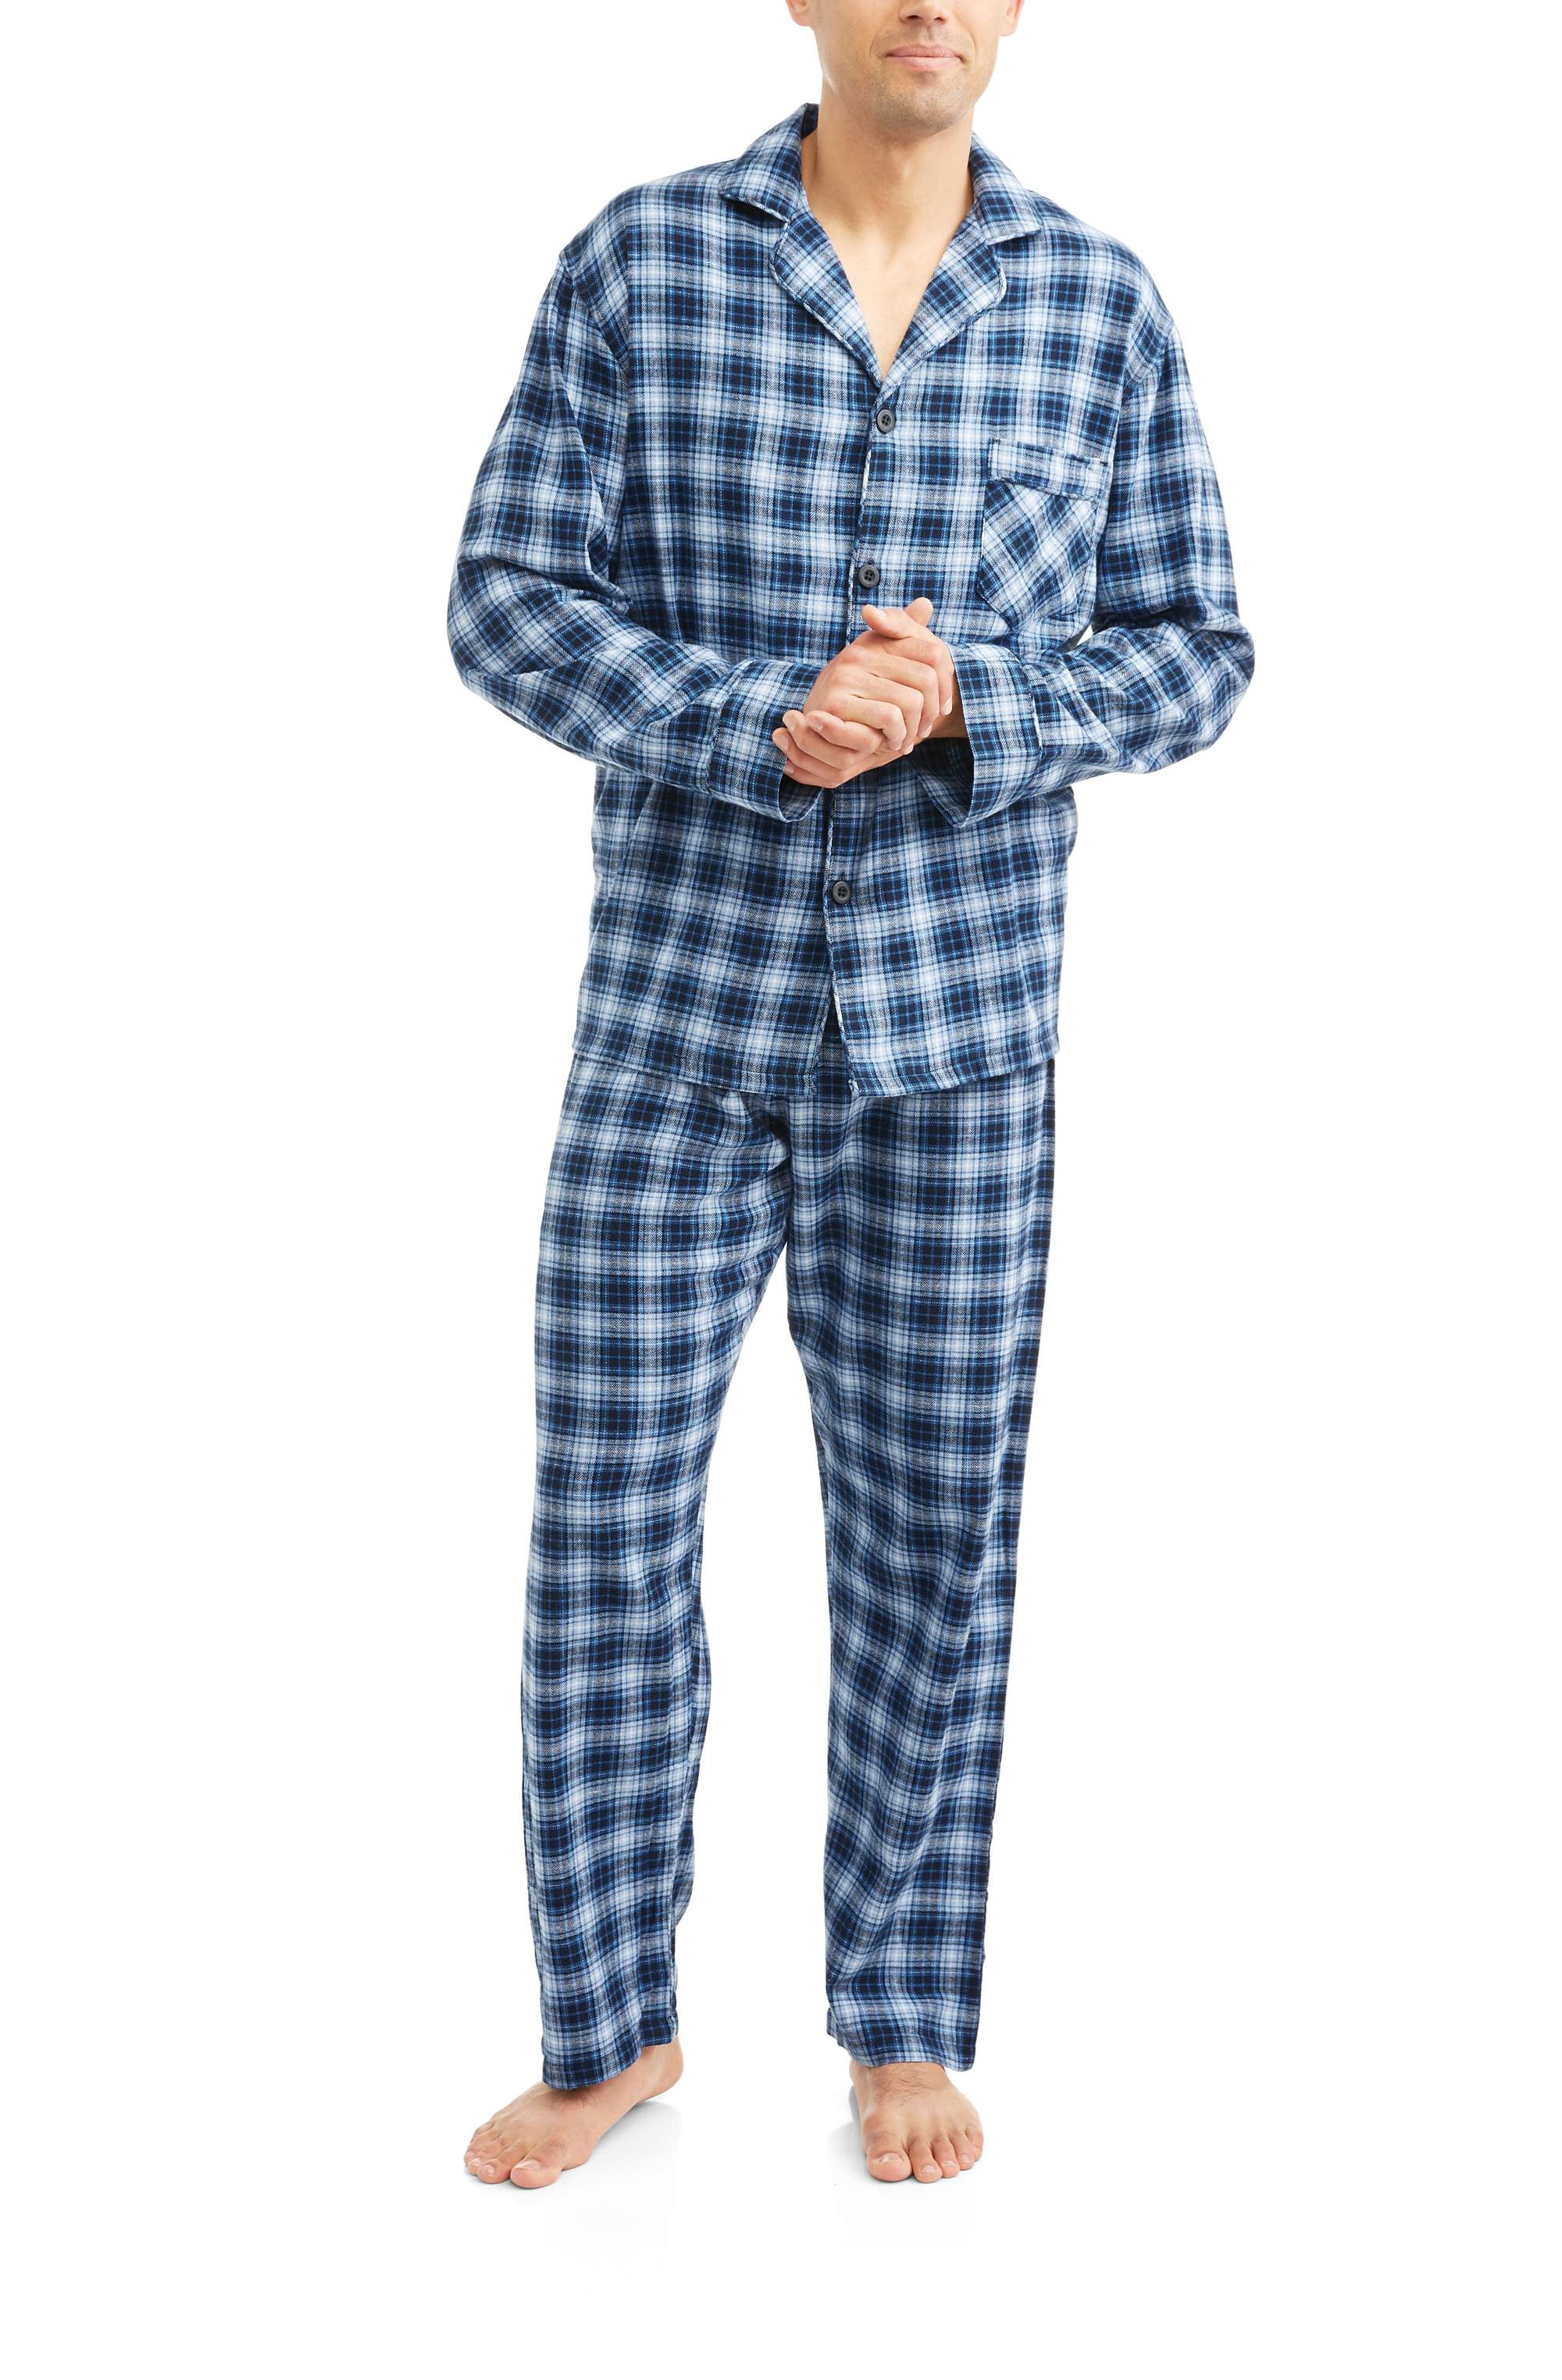 Mens Pyjamas Set 100% Cotton Checked Pajama Short Pjs Summer 2 Piece Sleepwear Nightwear Loungewear